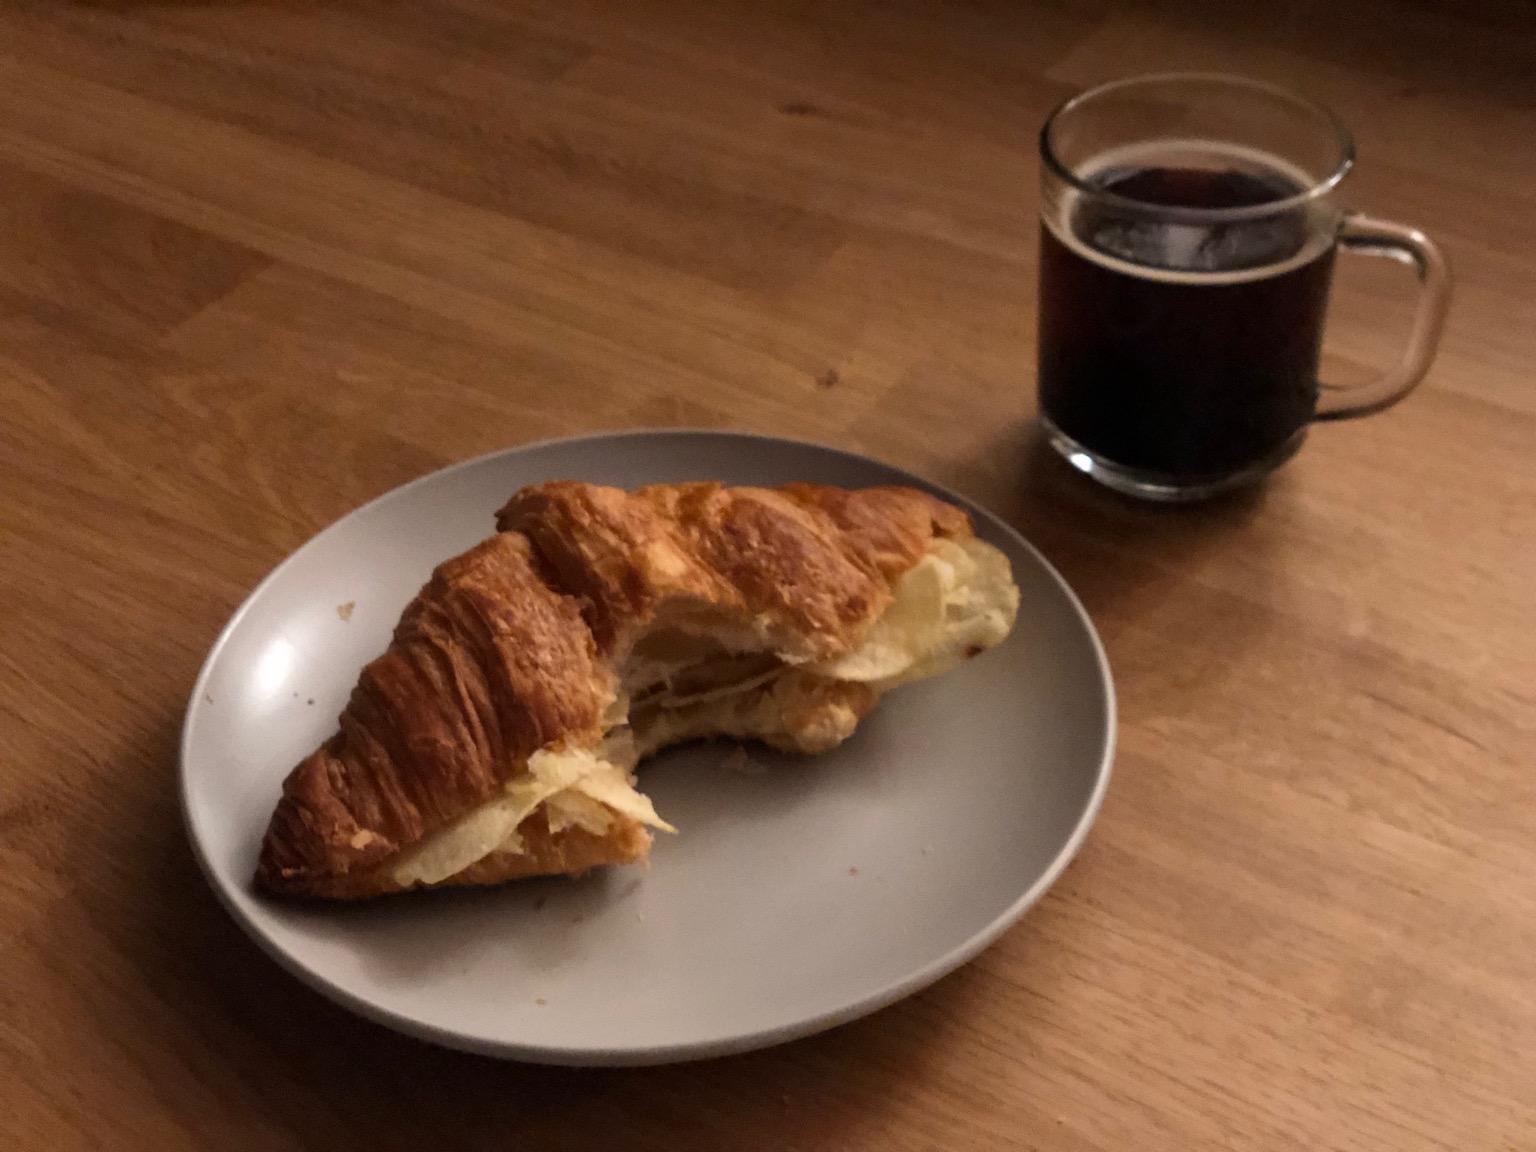 Crisp croissant with bite taken alongside drink